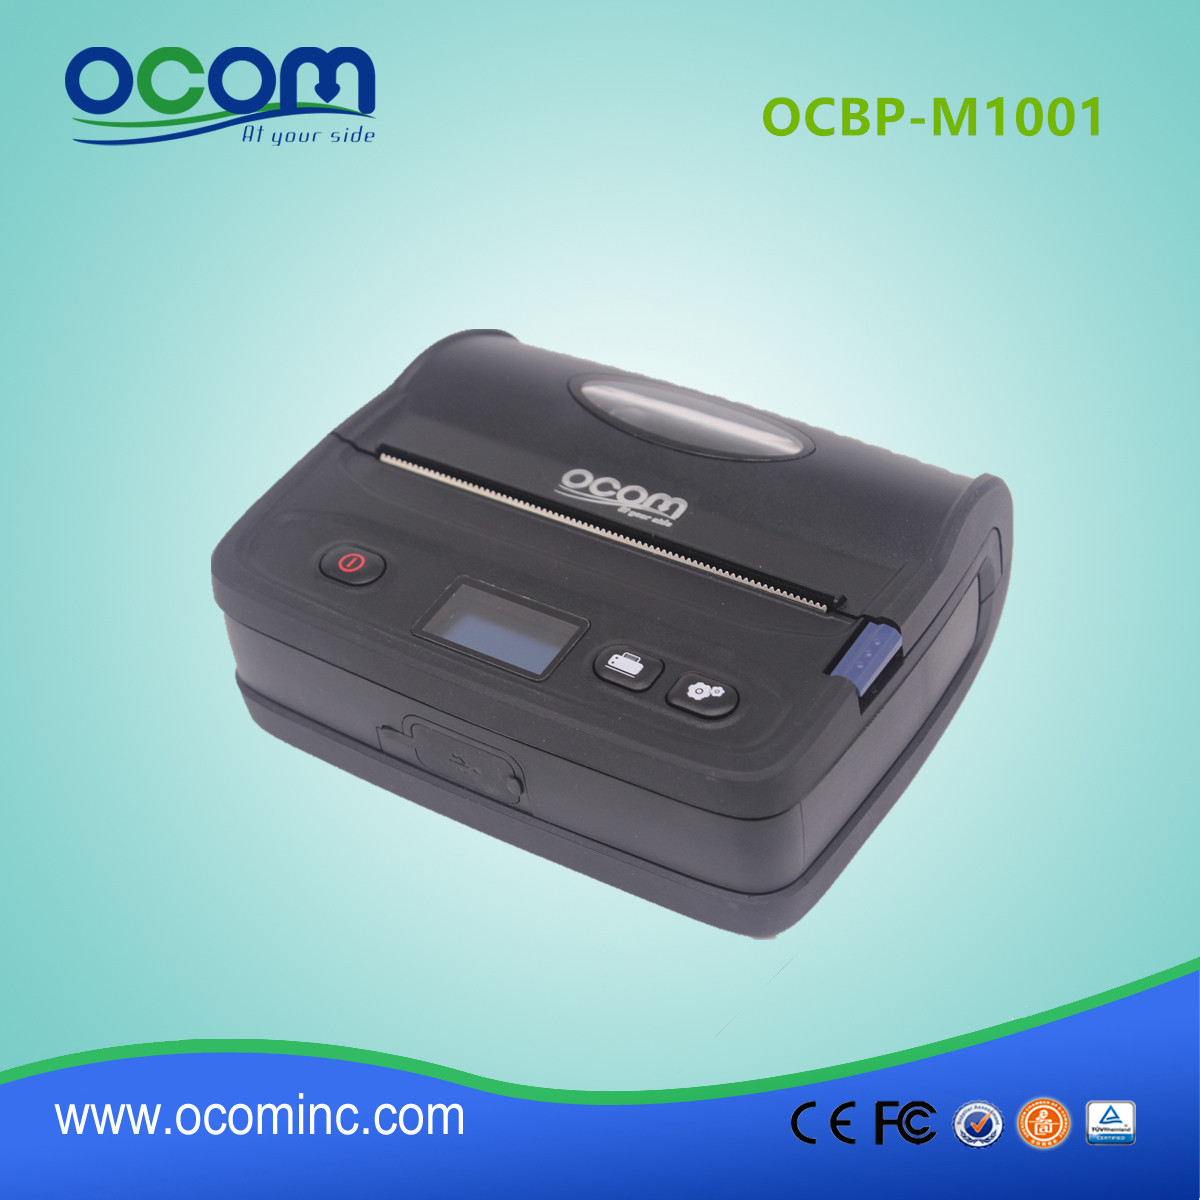 OCBP-M1001 Black Mobile Adhesive POS Thermal Receipt Barcode Label Printer